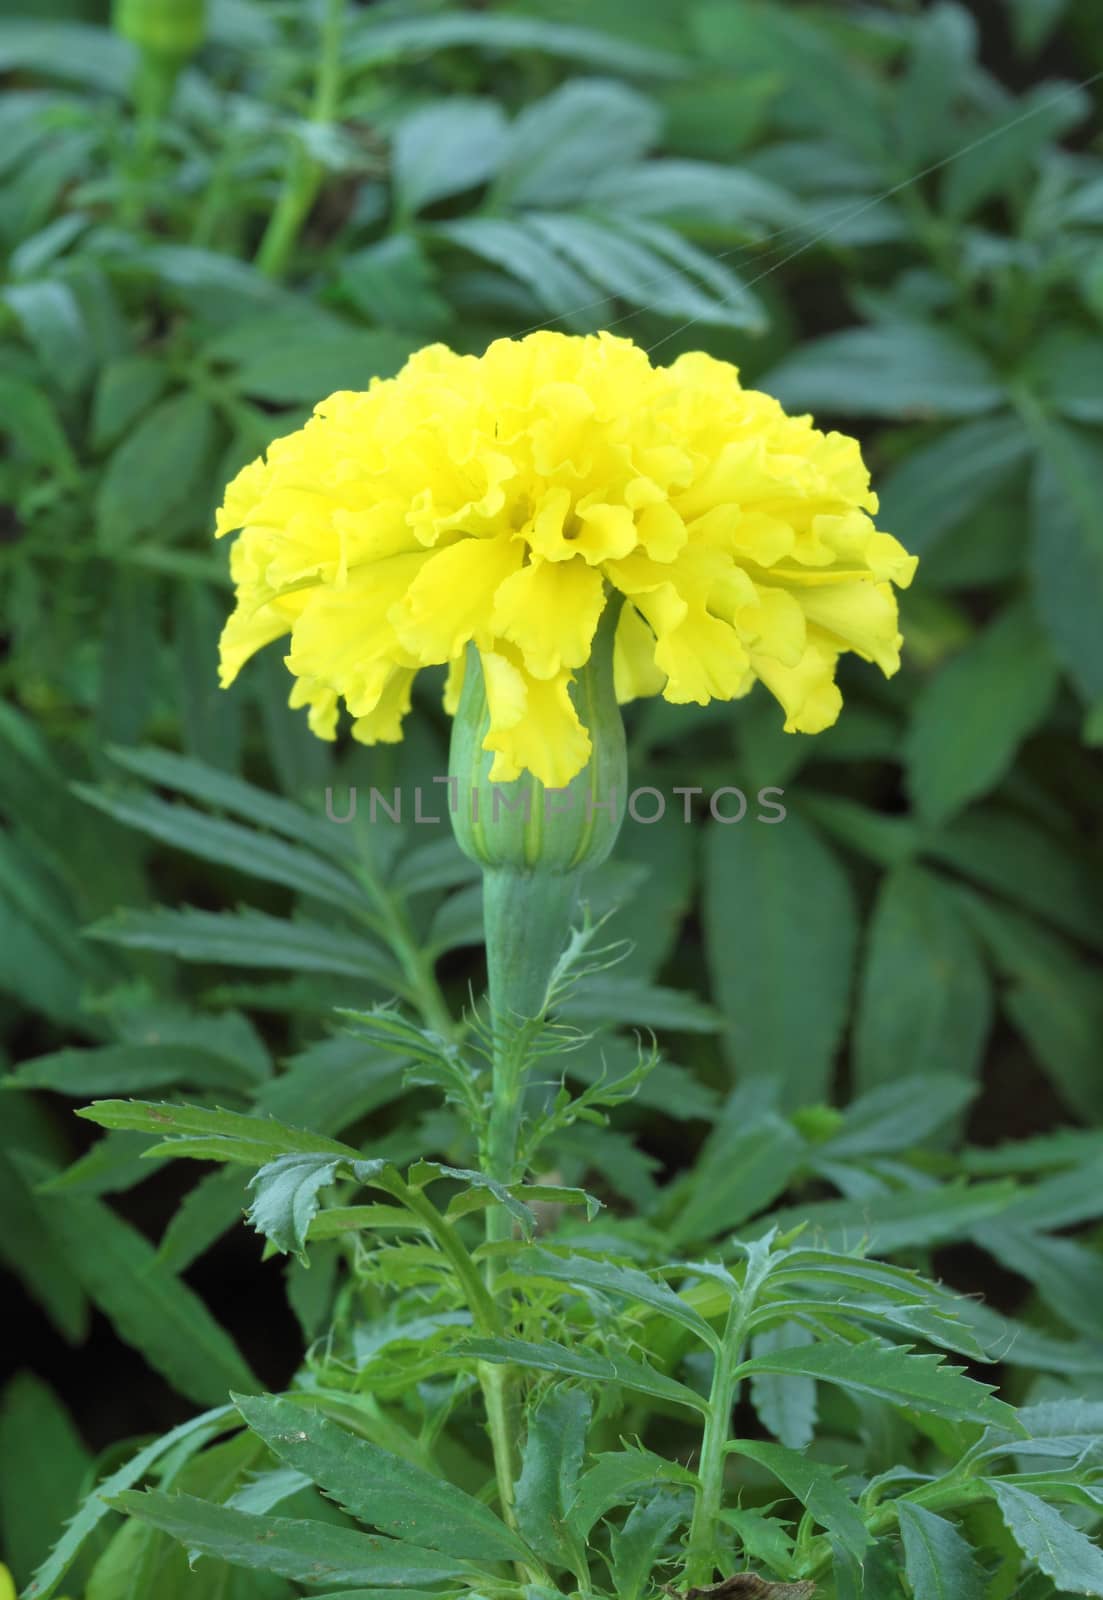 Mary gold, Yellow flower in garden by geargodz